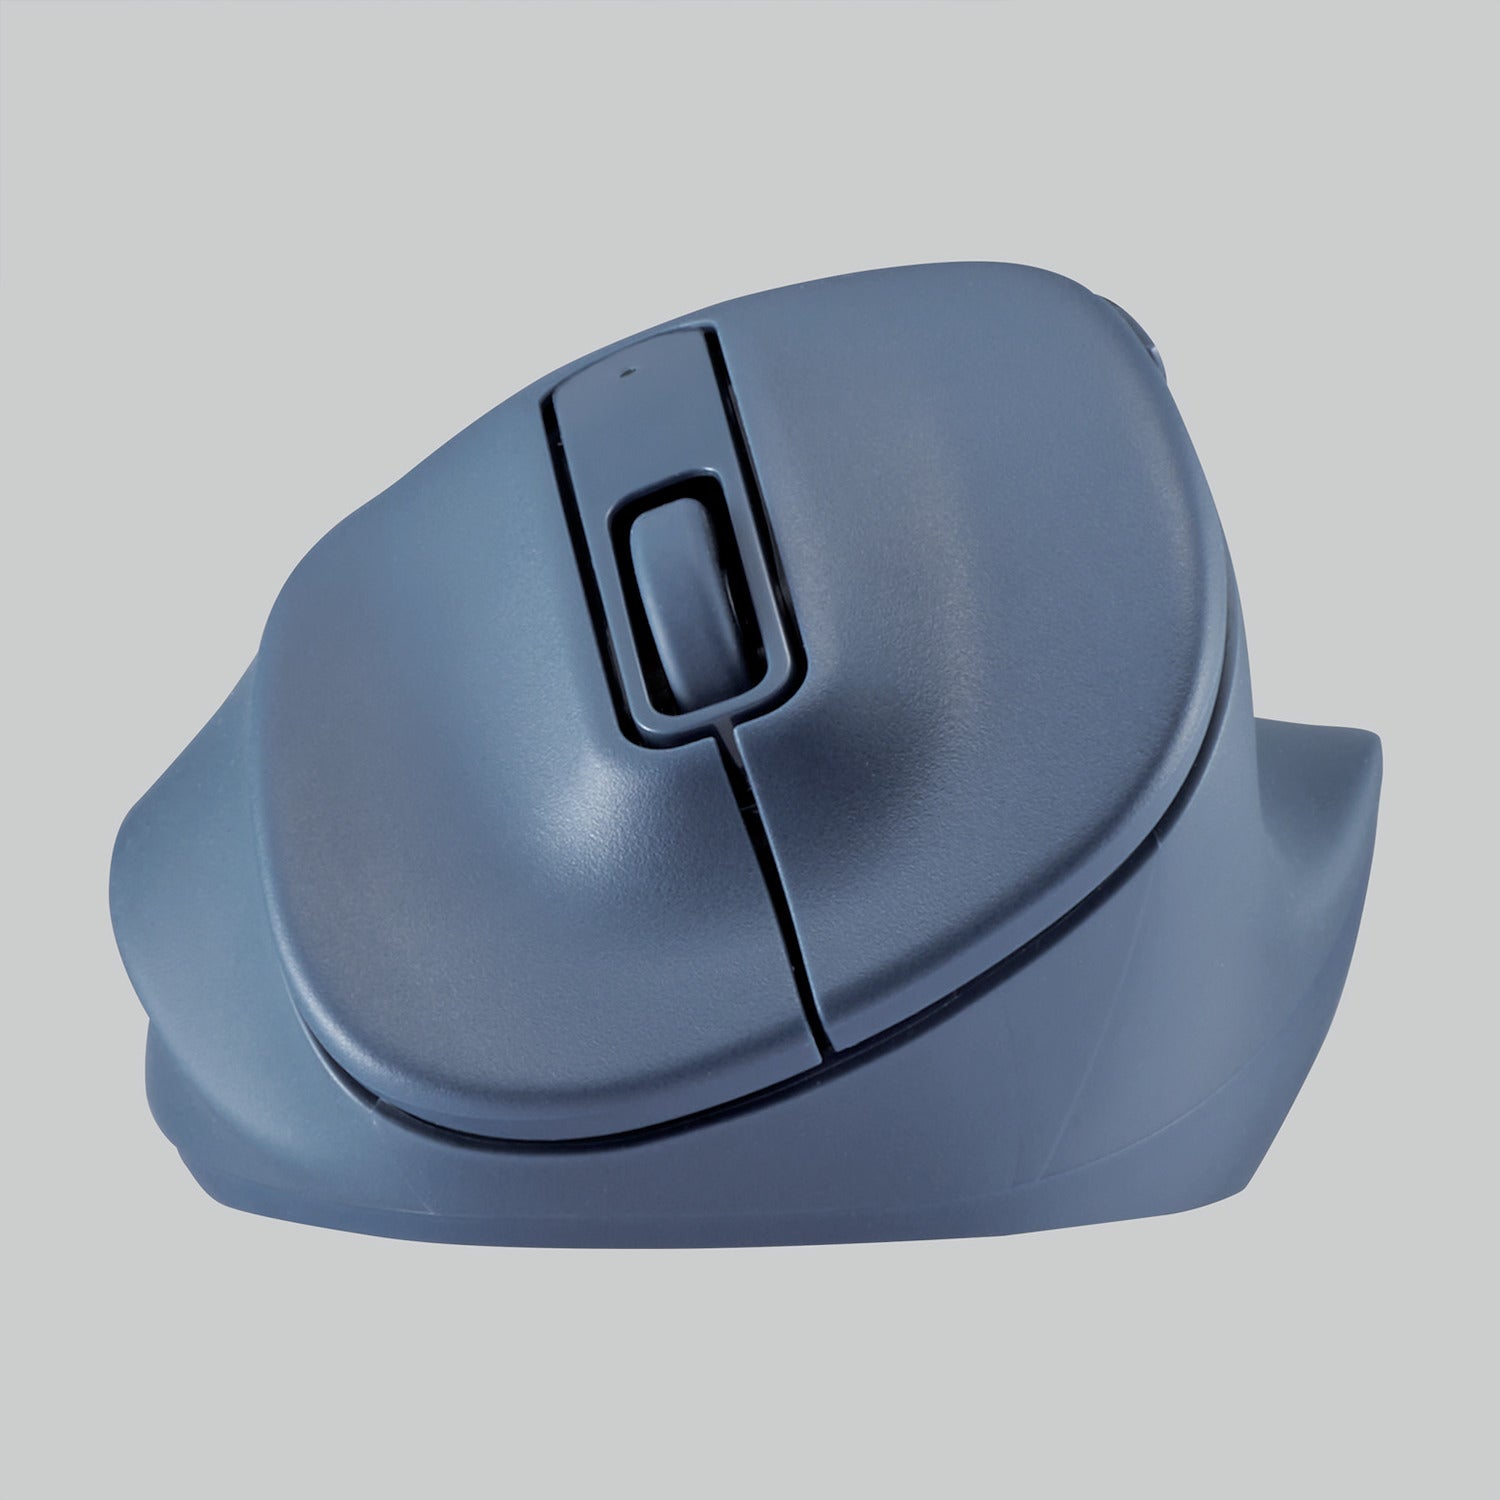 EX-G Wireless USB Ergonomic Mouse